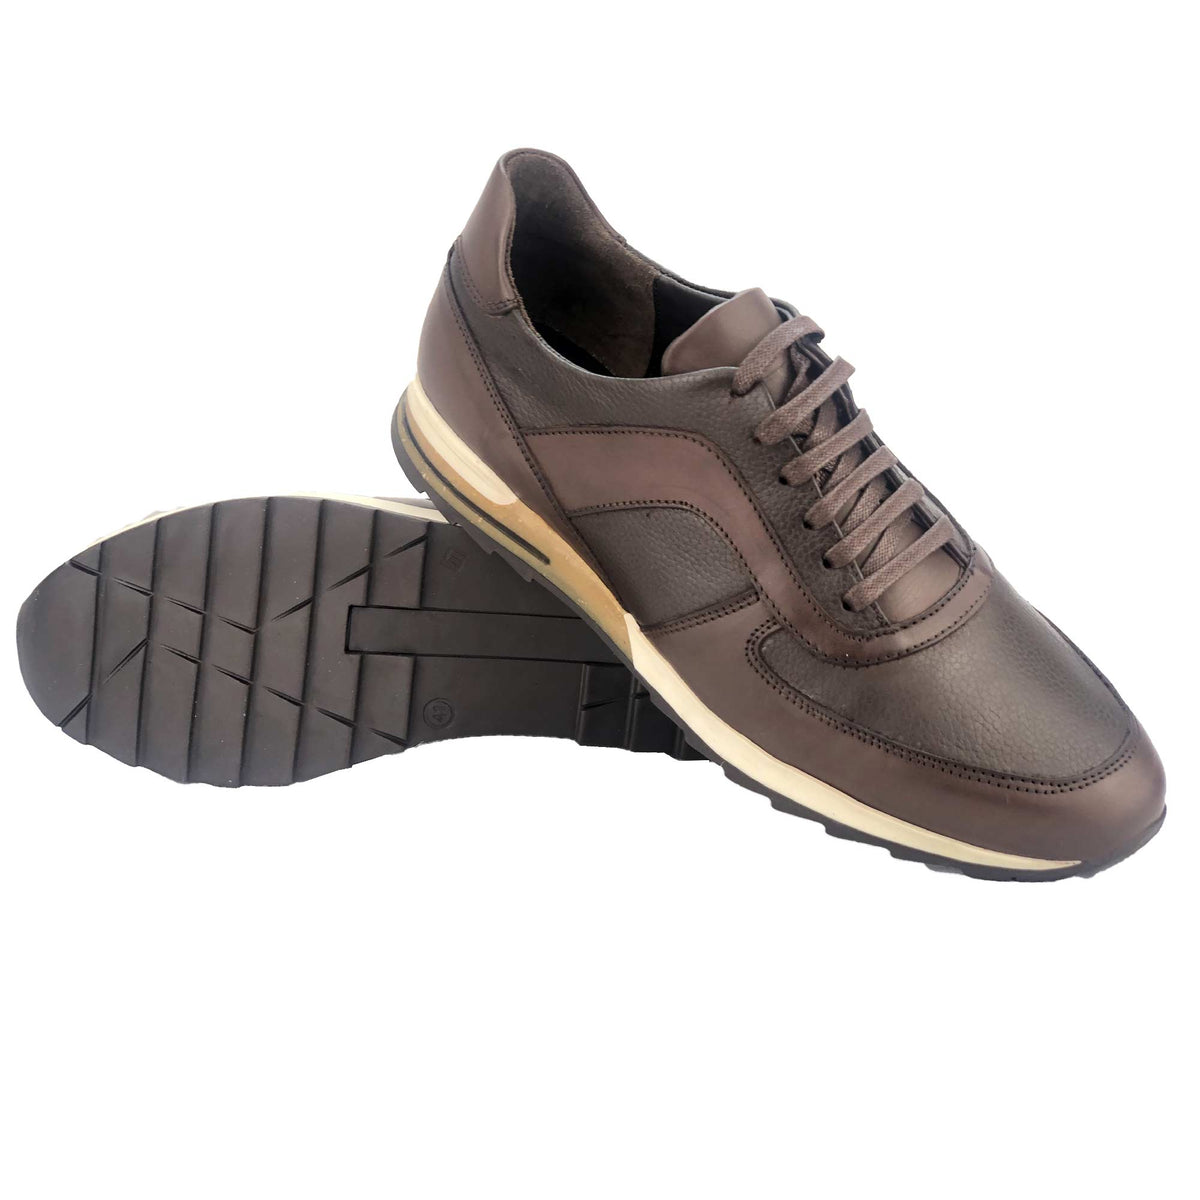 BSK423-015 - Chaussure cuir Marron - deluxe-maroc